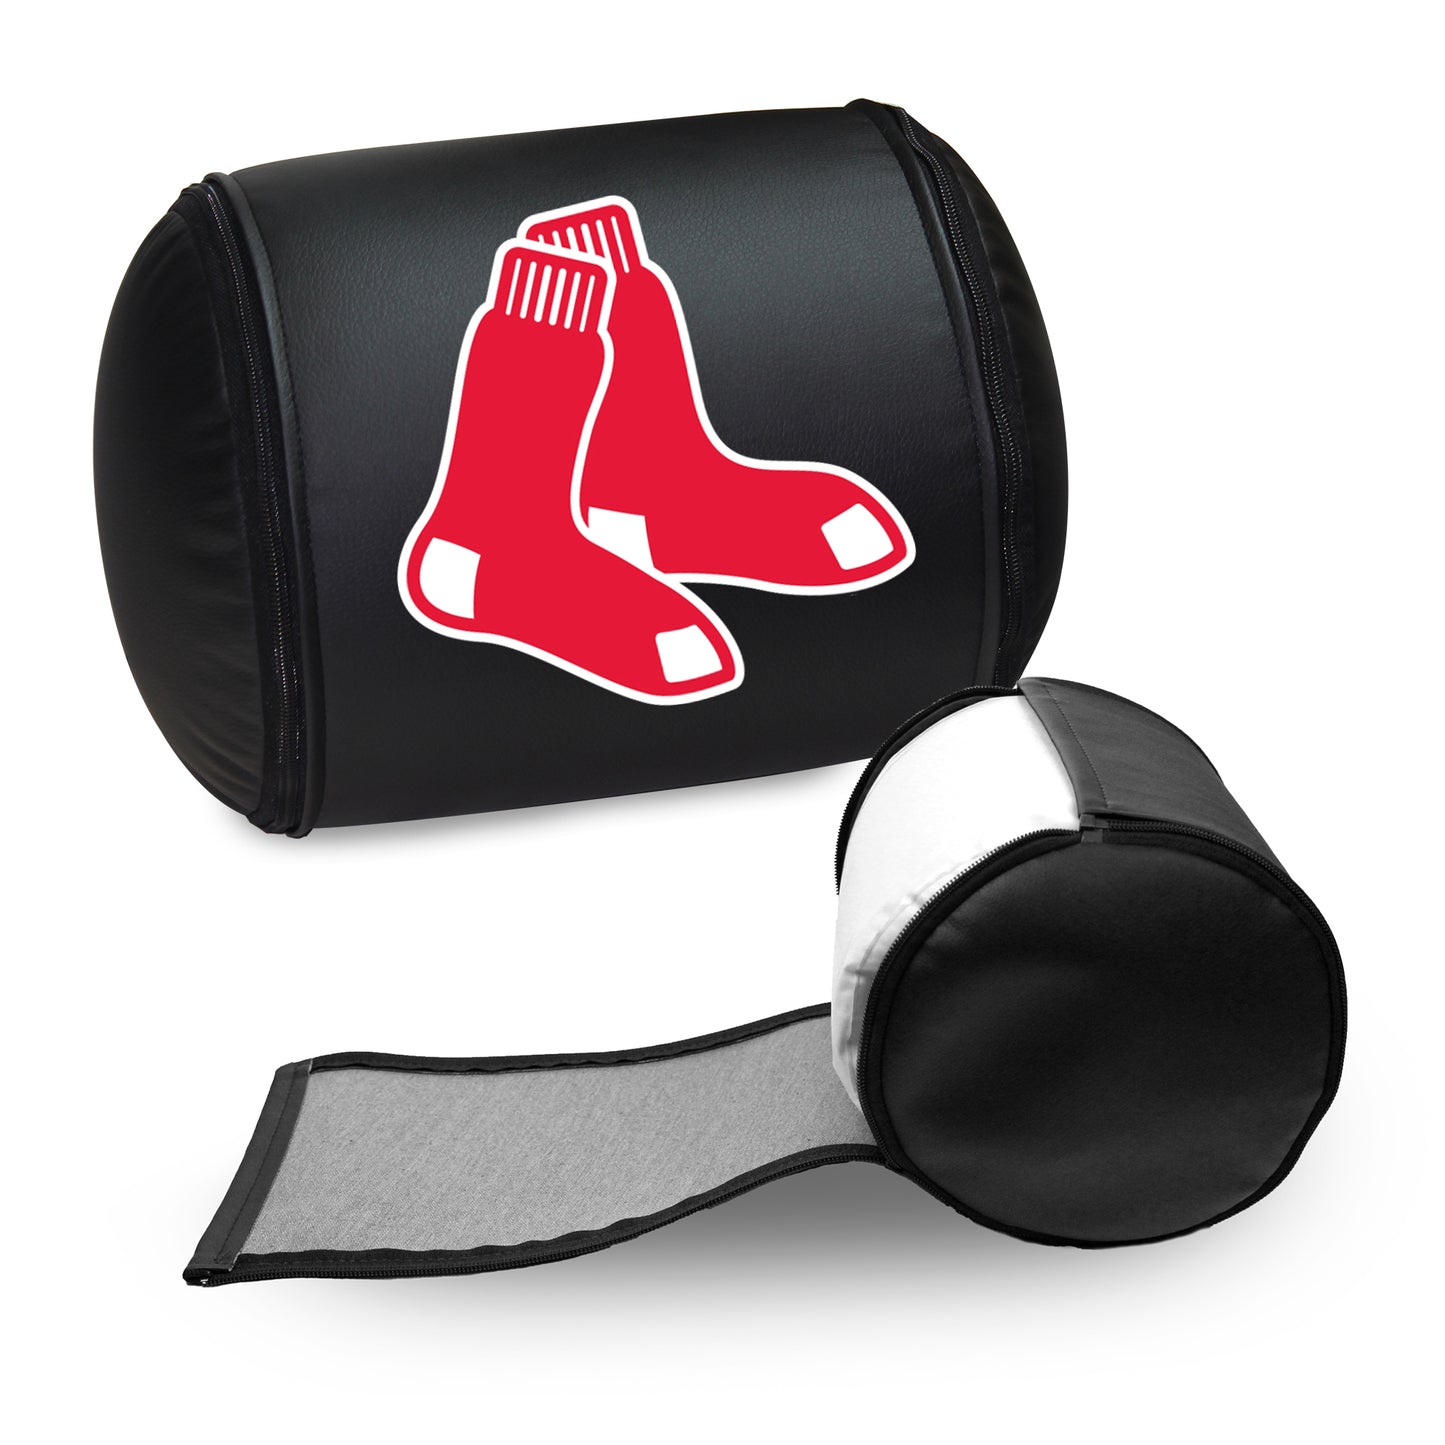 Boston Red Sox Primary Logo Panel